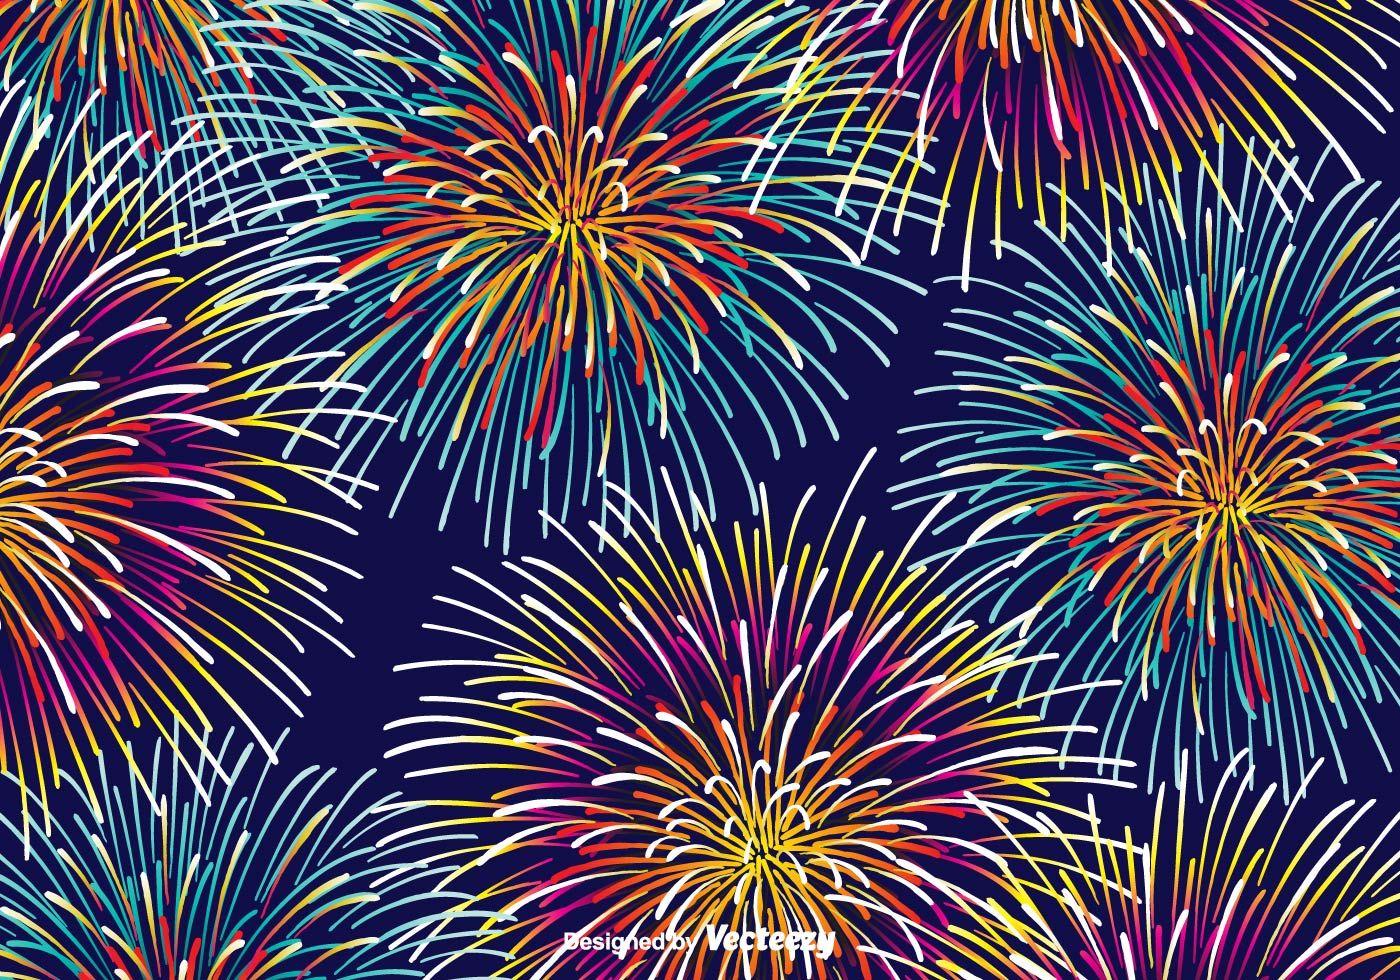 Fireworks Free Vector Art - (12740 Free Downloads)